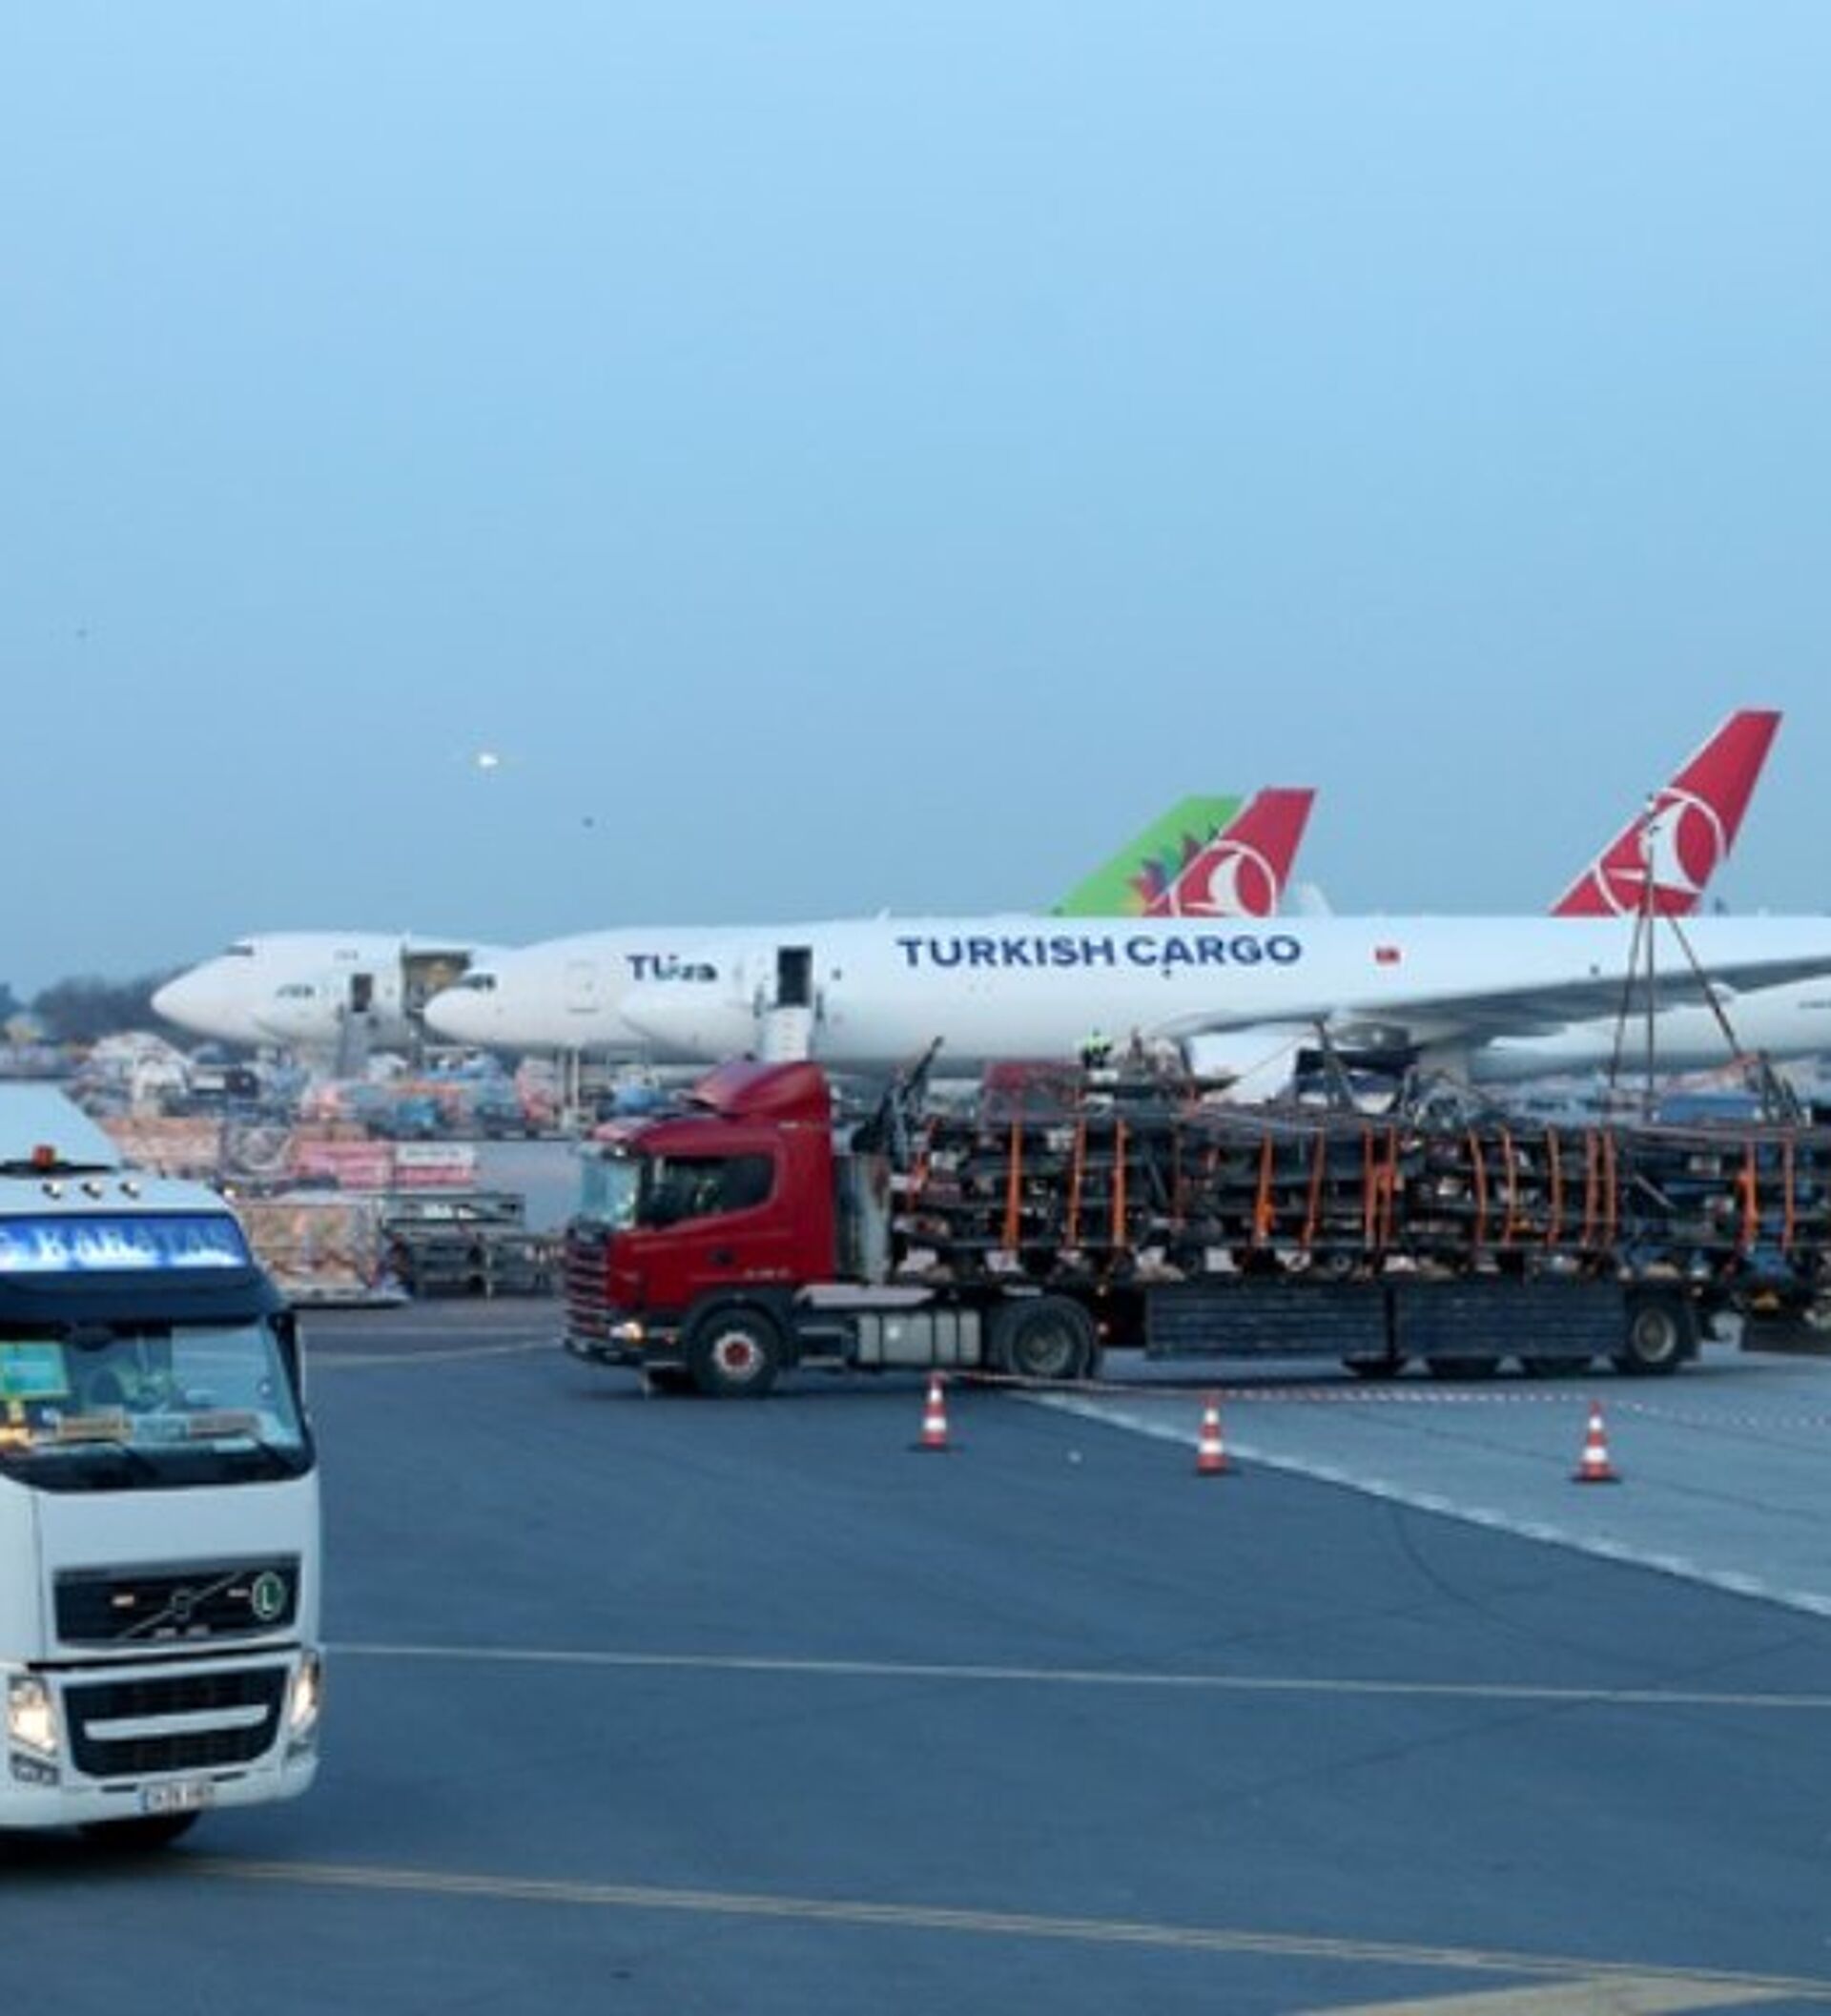 Аэропорт турция россия. Аэропорт Ататюрк Стамбул. Turkish Airlines новый аэропорт Стамбул. Карго Турция. Истанбул Турция аэропорт трап.